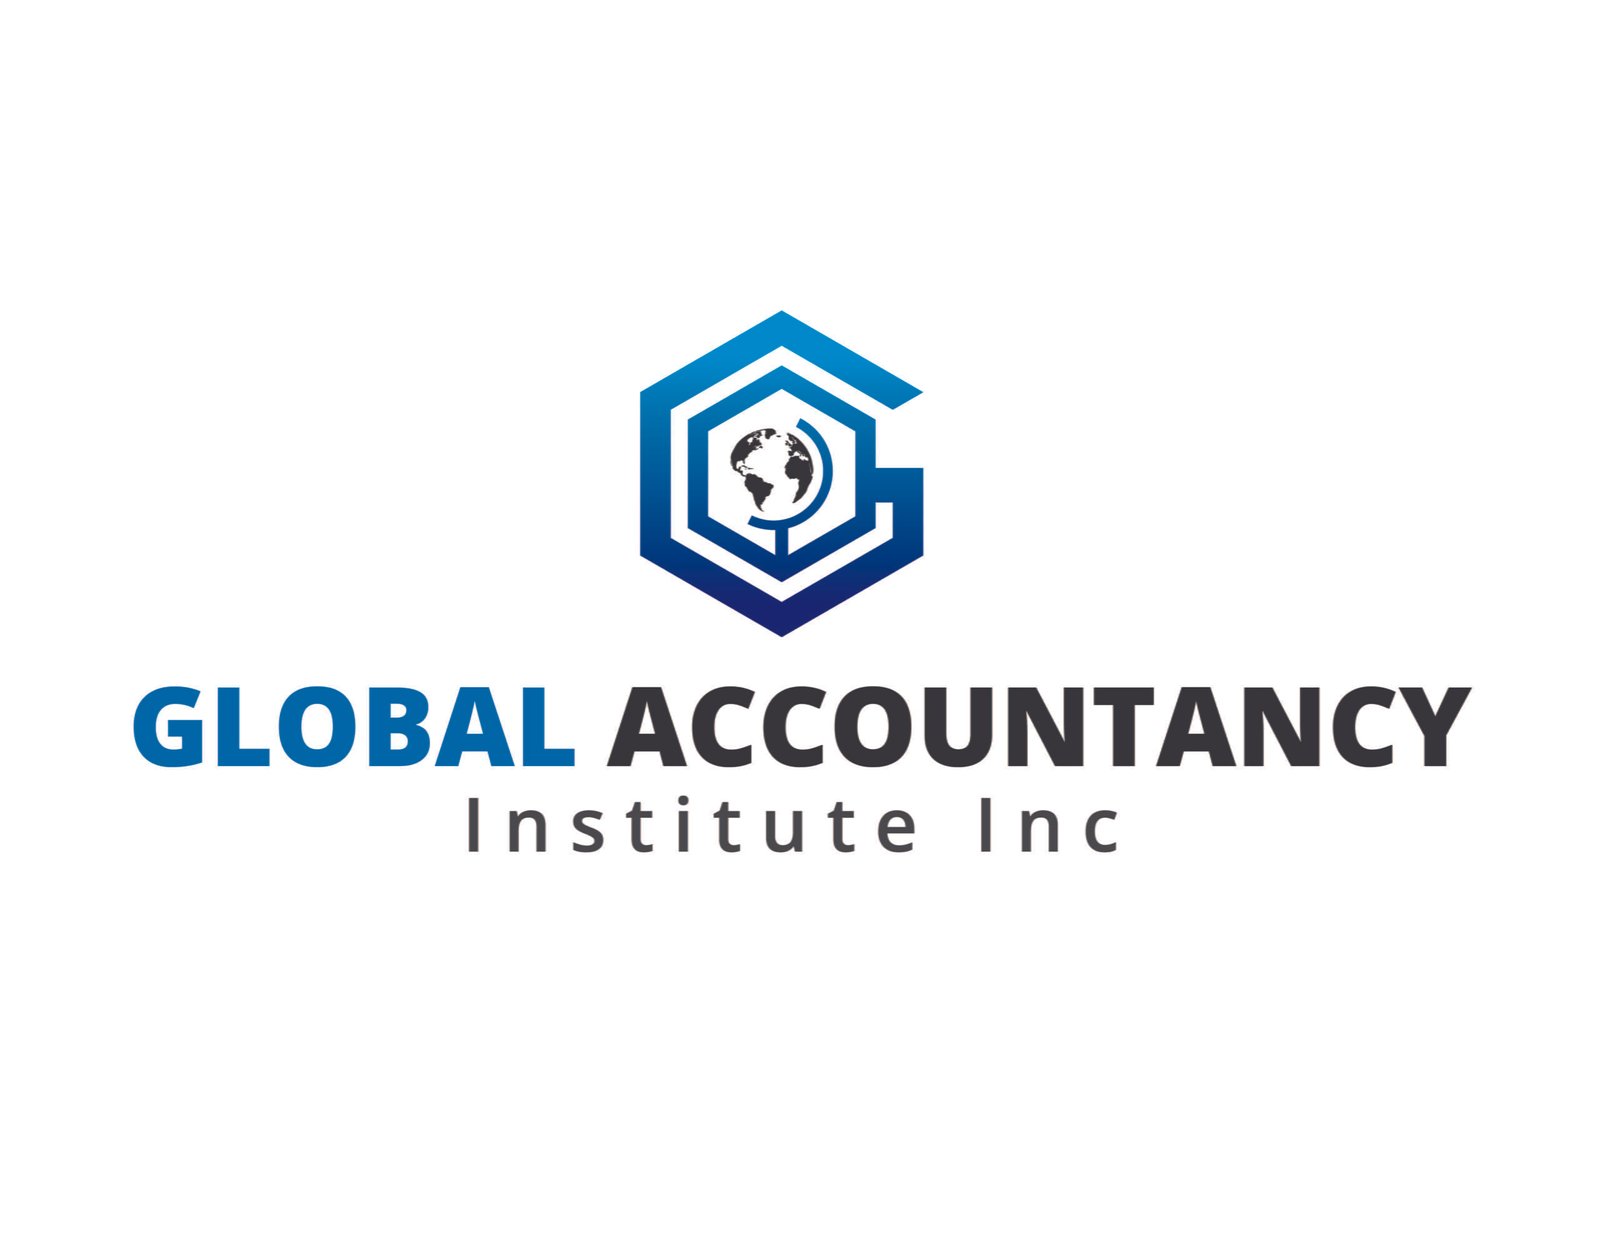 Global Accountancy Institute Inc.